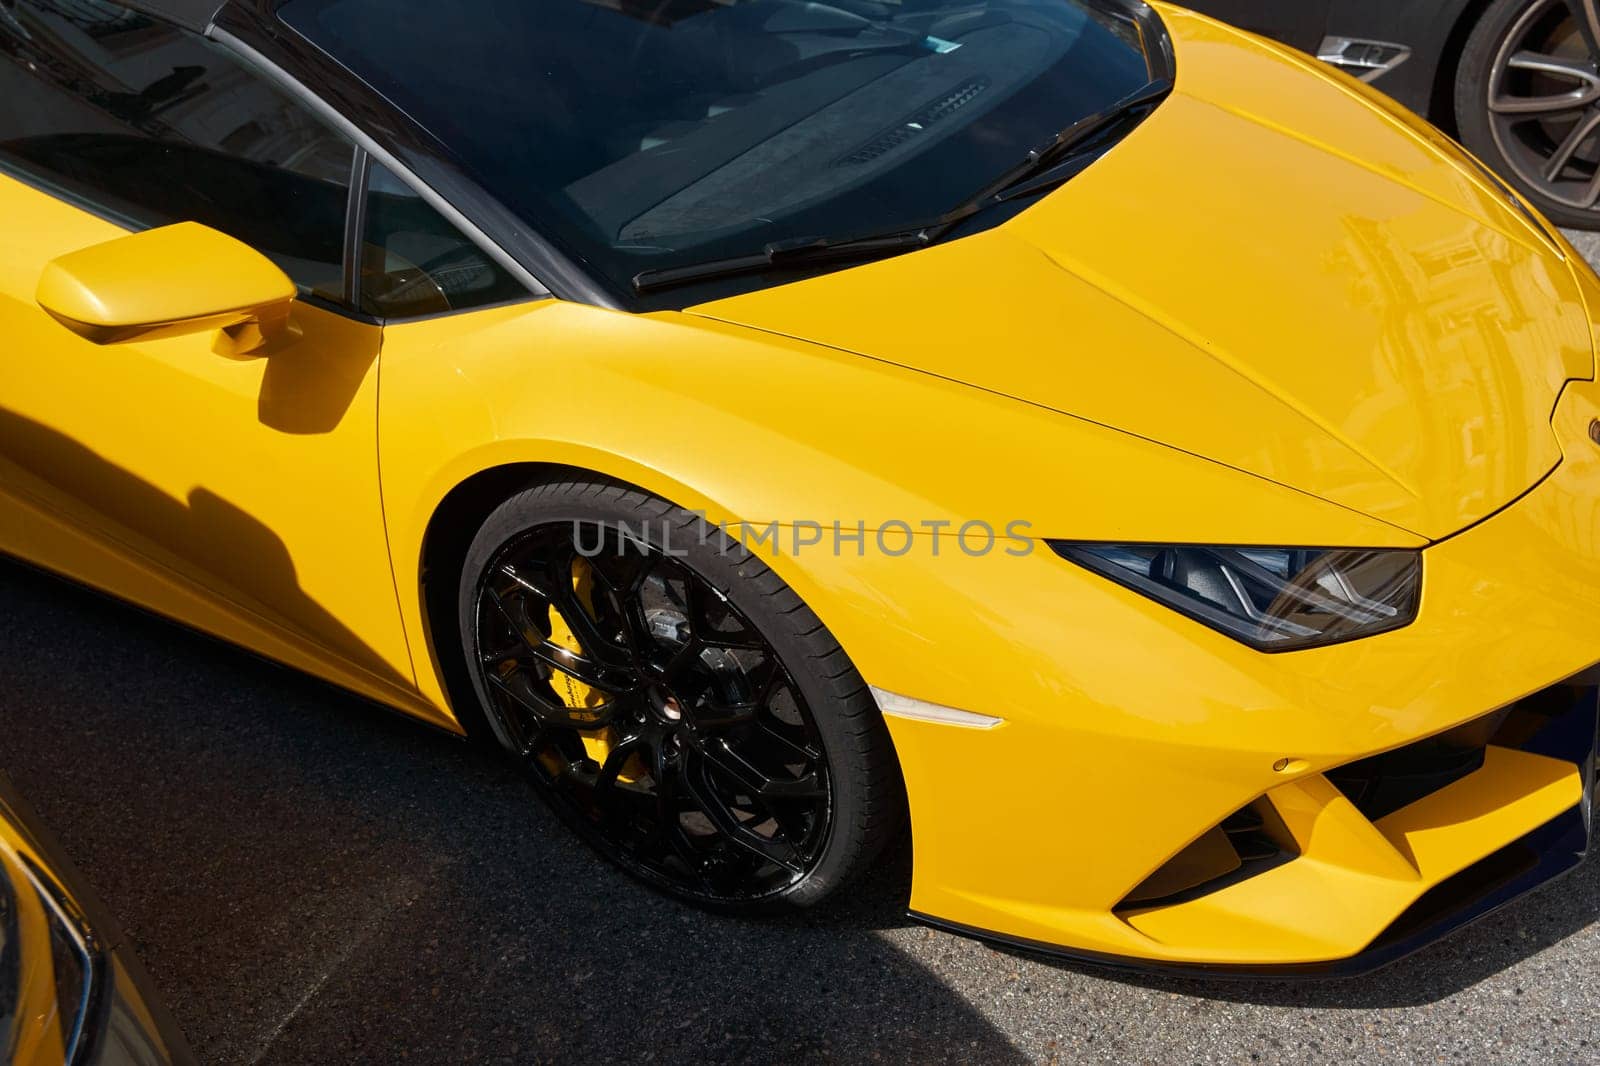 Monaco, Monte Carlo, 29 September 2022 - Close-up view of yellow sports car Lamborghini on street. High quality photo